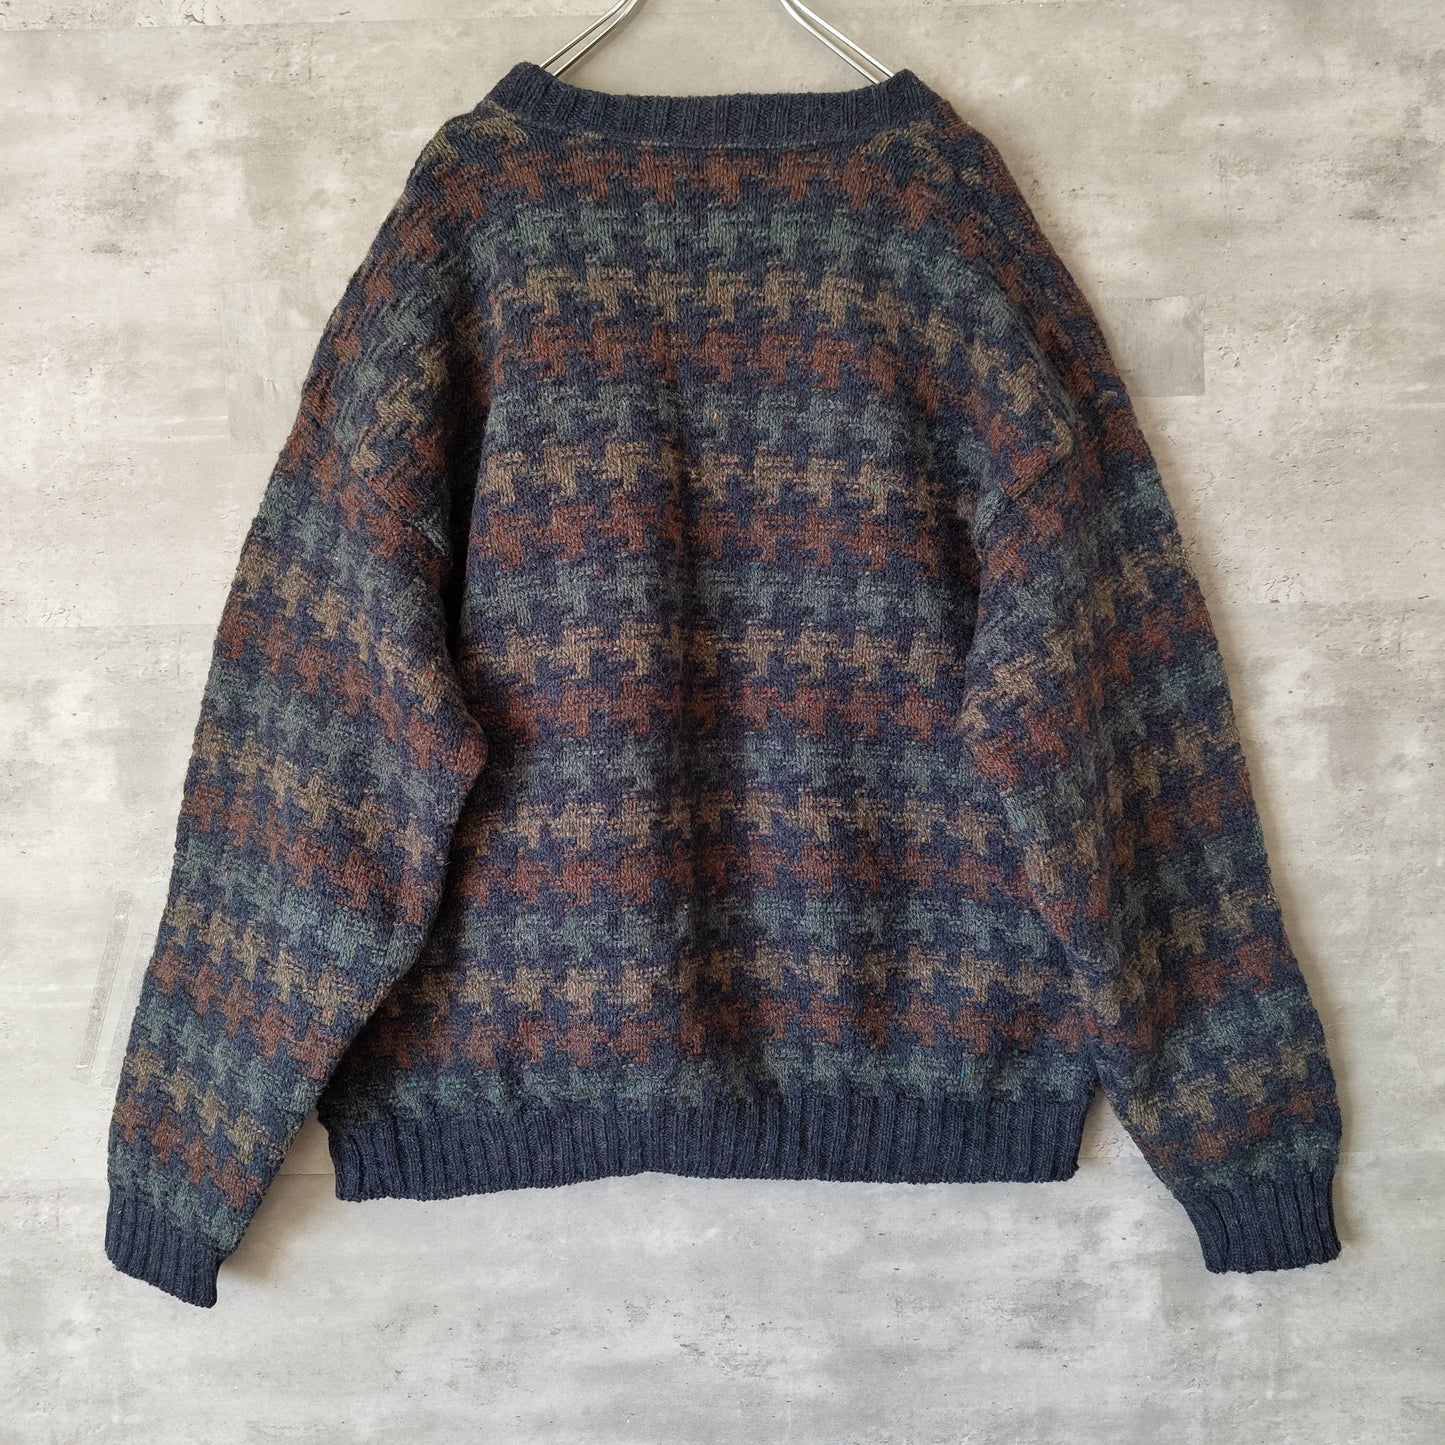 [NO BRAND] vintage wool sweater